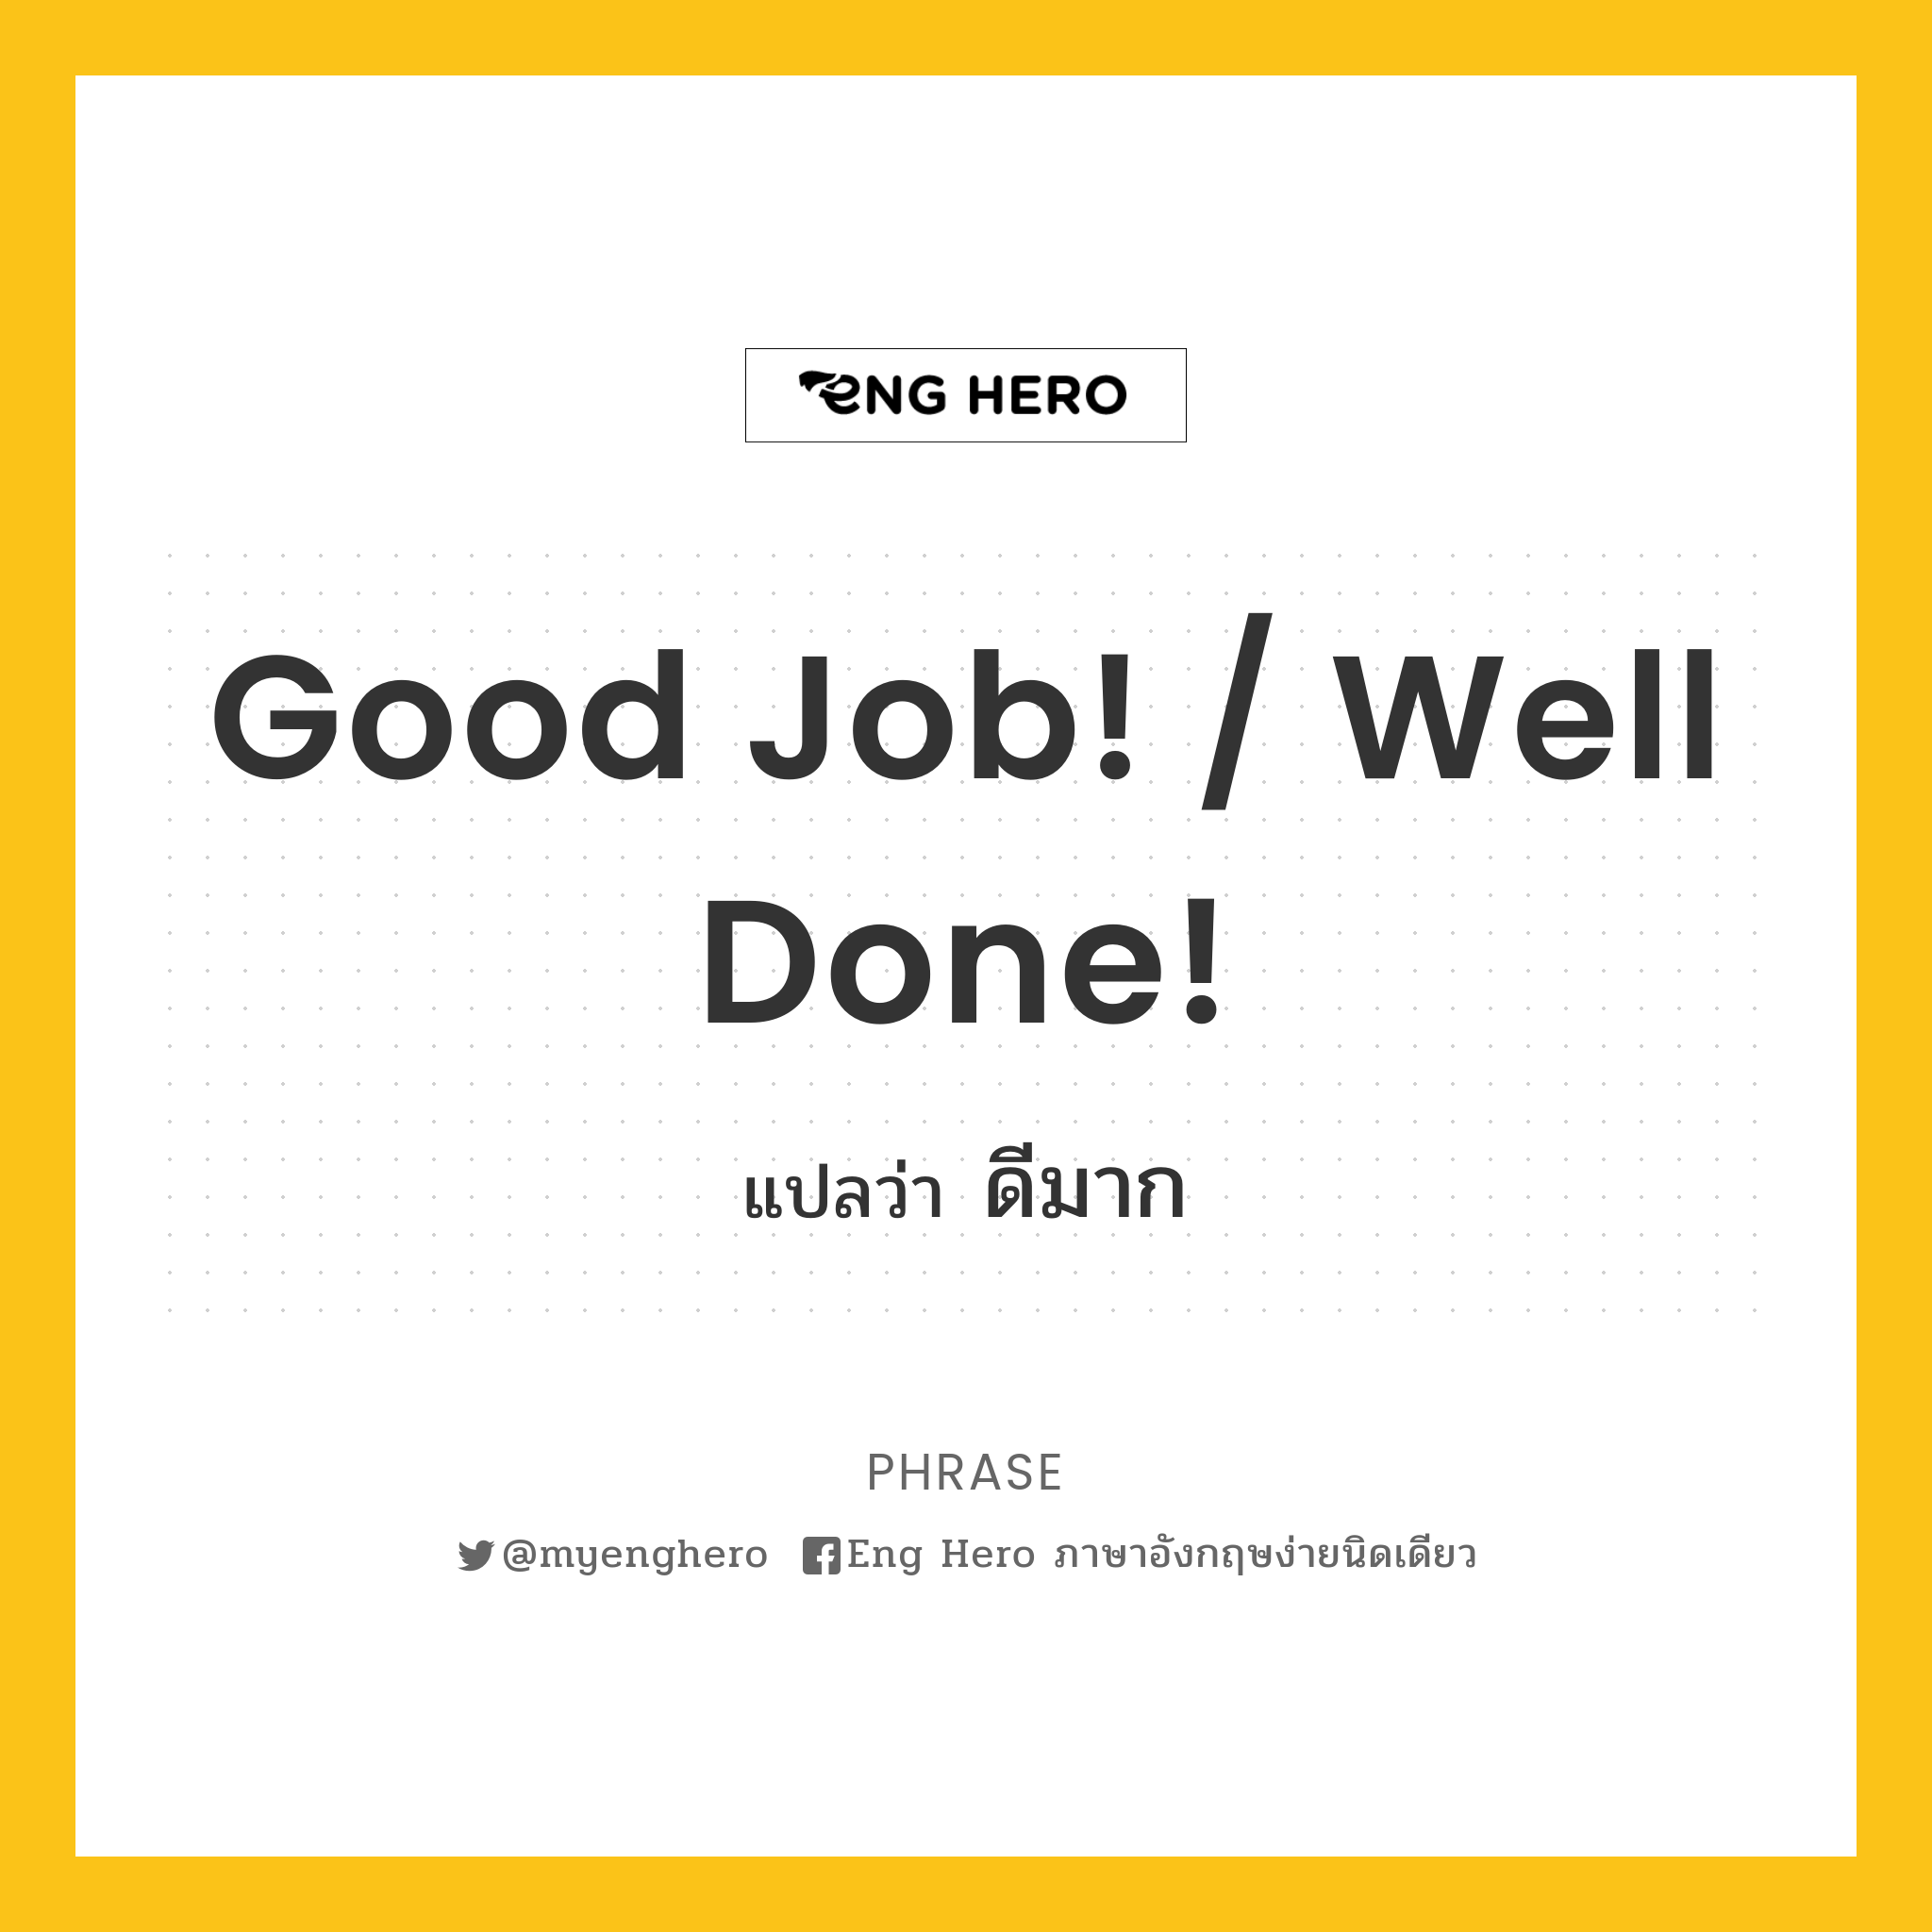 Good job! / Well done!